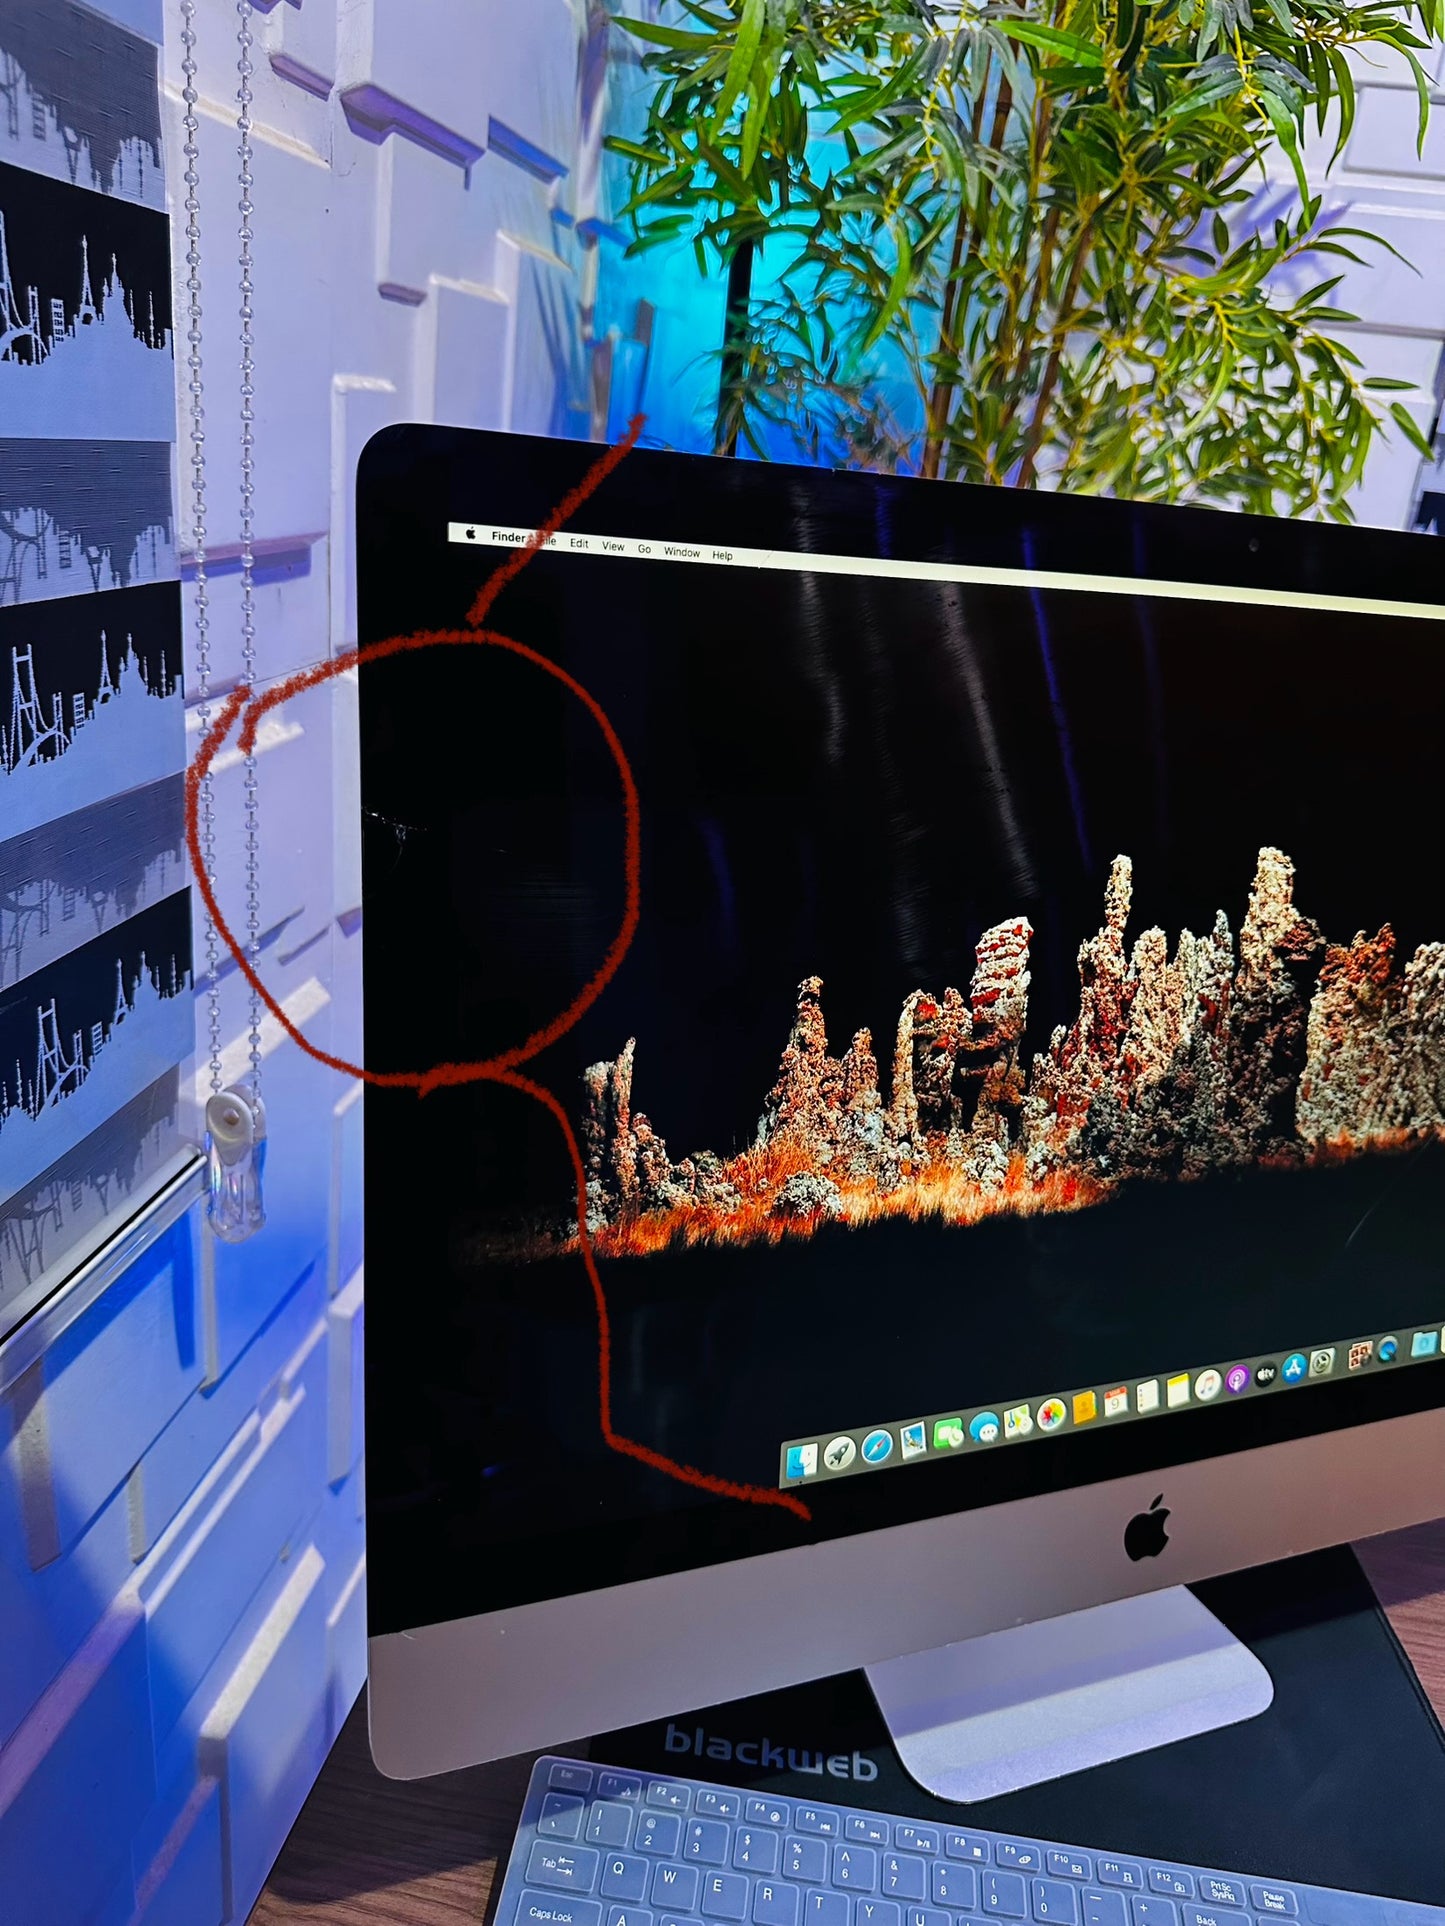 27-inch Apple iMac Pro 2013 - Intel Core i5 - 1TB HDD - 8GB RAM - 2GB Nvidia GeForce GTX Graphics - (Cracked Glass)